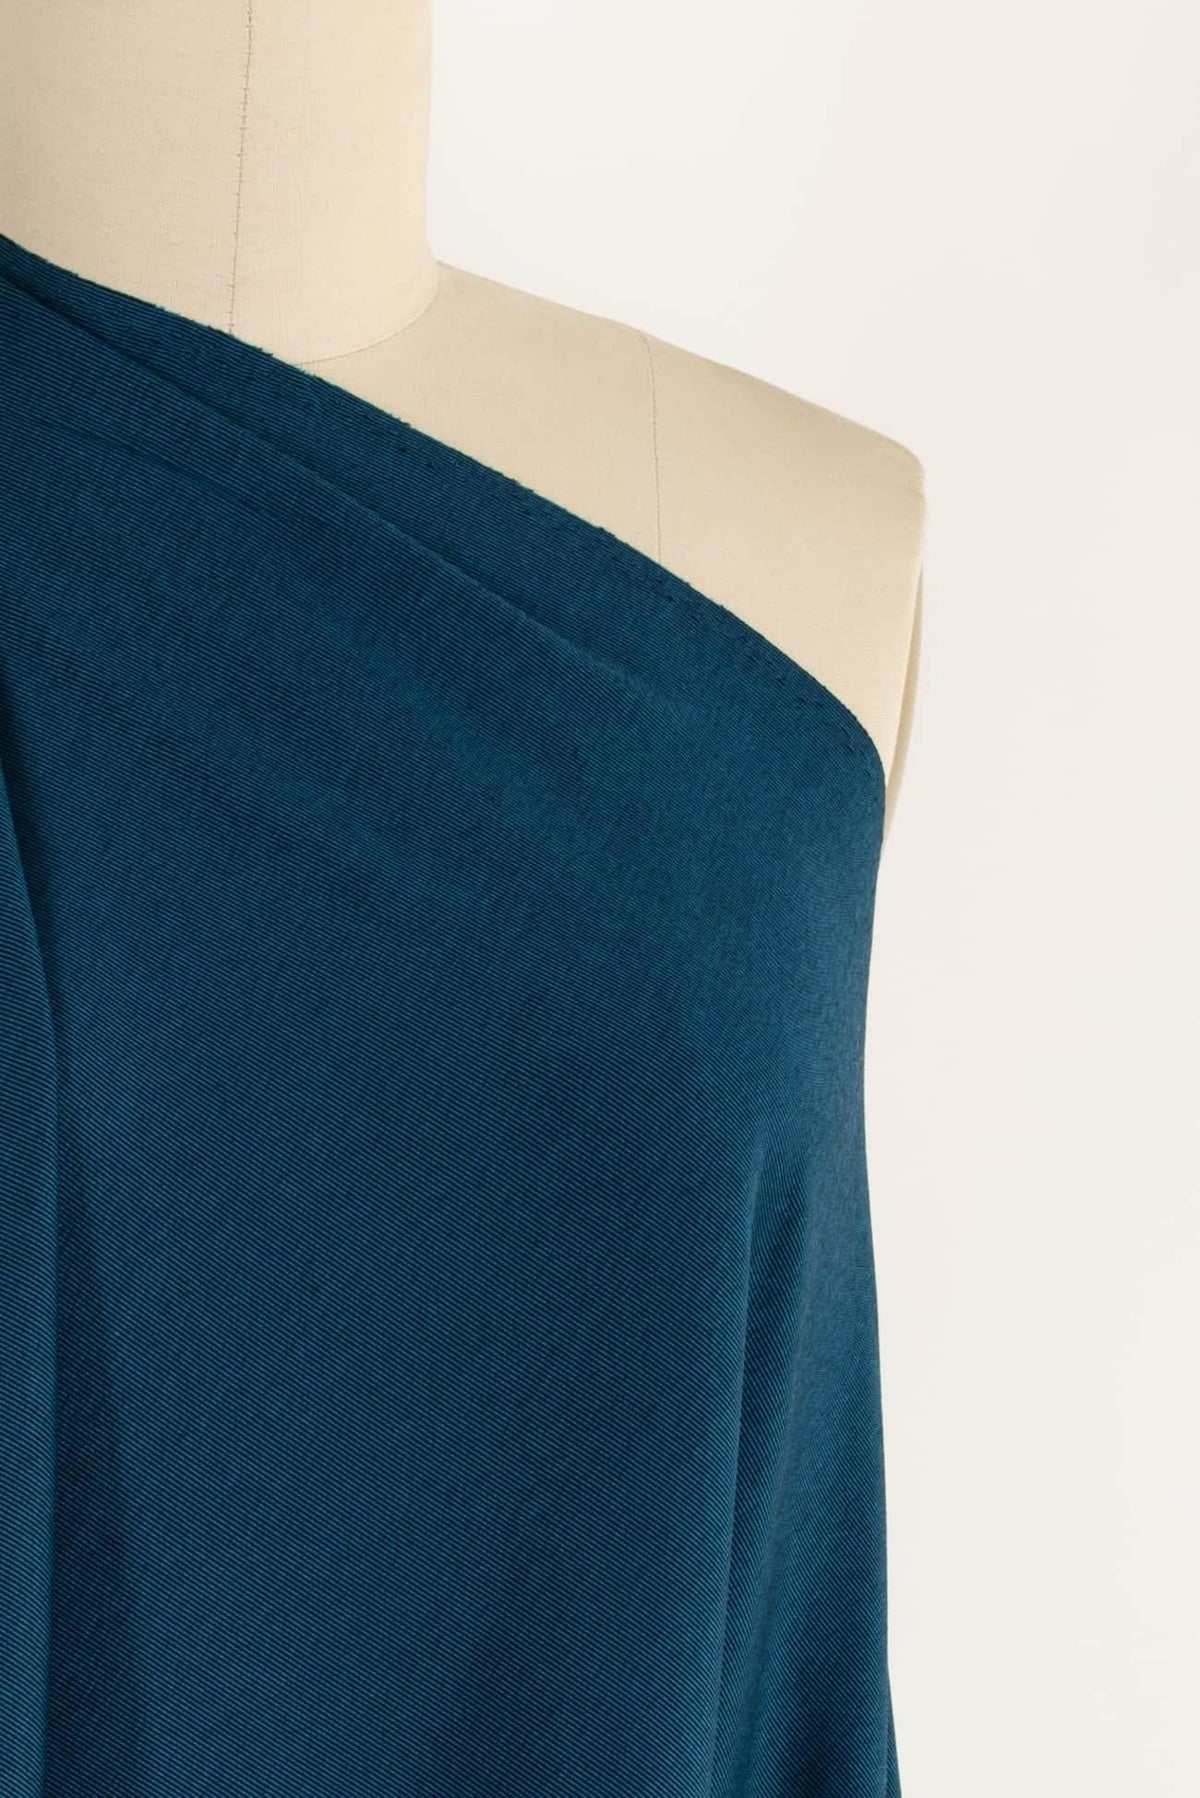 Mediterranean Blue Italian Cotton Knit - Marcy Tilton Fabrics